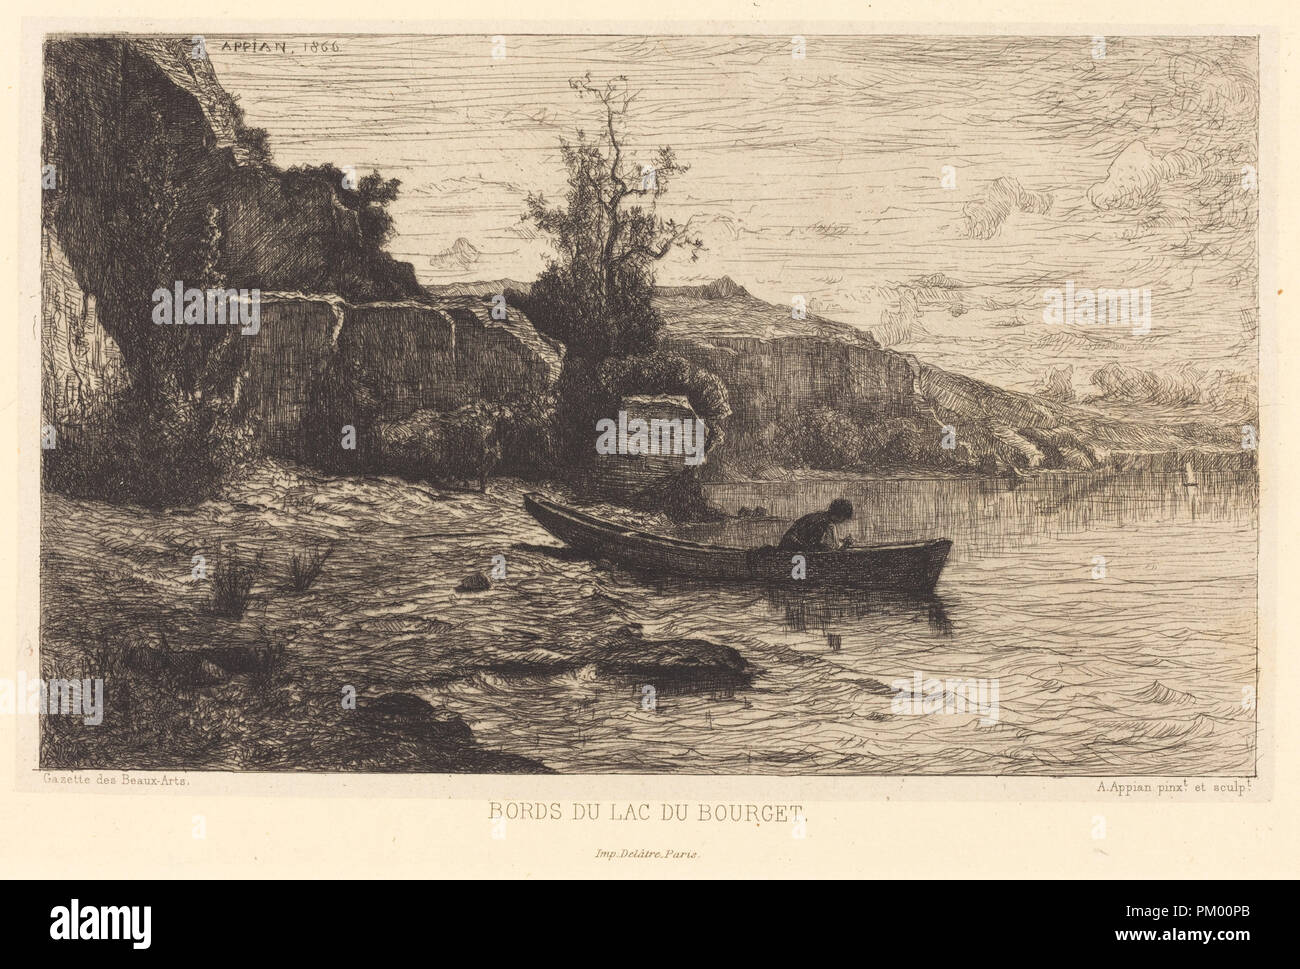 Bords du lac du Bourget. Dated: 1866. Medium: etching. Museum: National Gallery of Art, Washington DC. Author: Adolphe Appian. Stock Photo